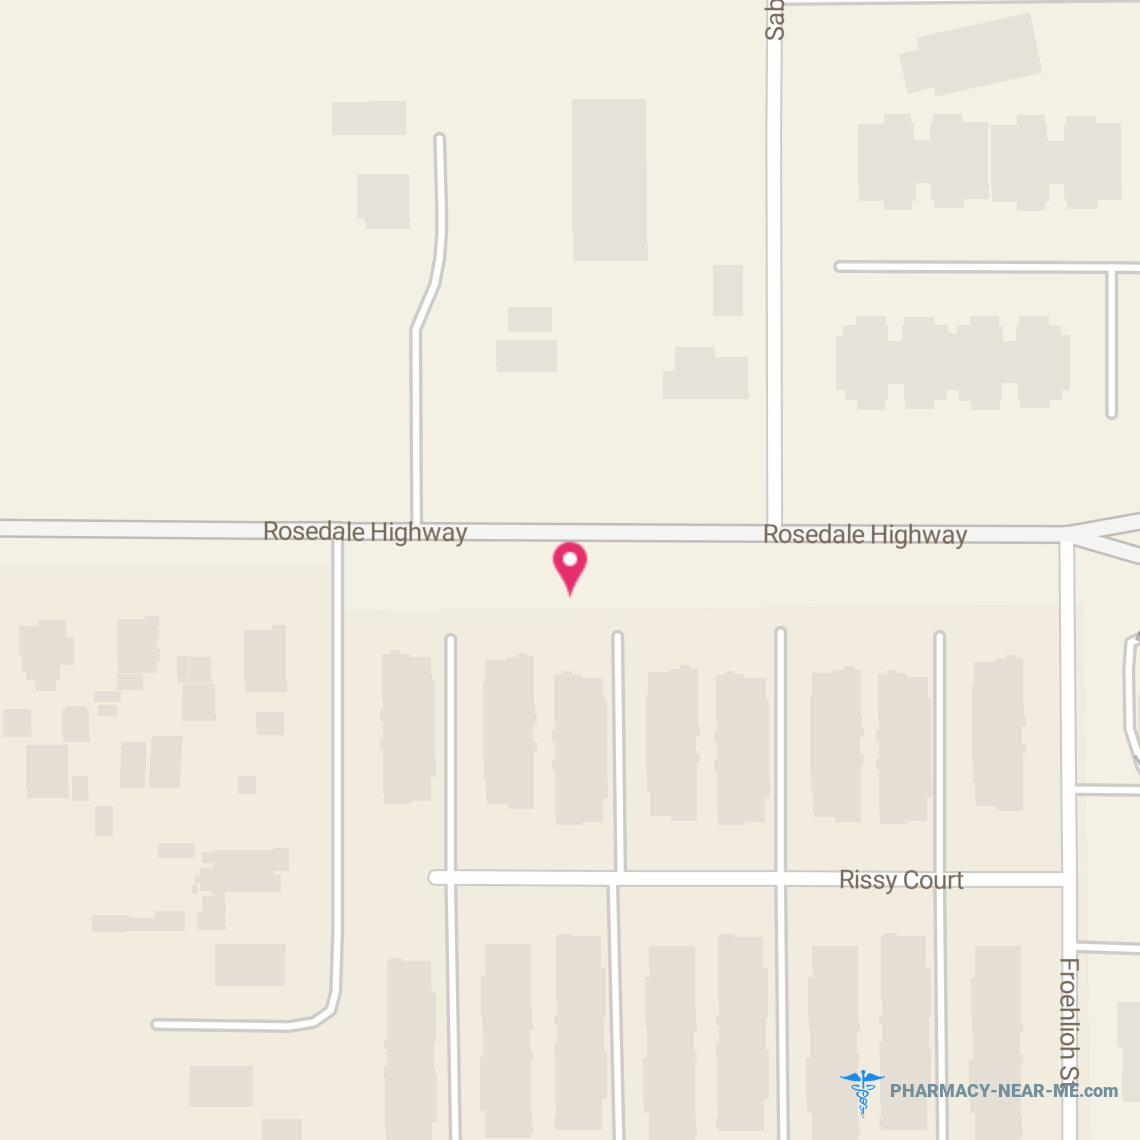 SAV-ON PHARMACY #0377 - Pharmacy Hours, Phone, Reviews & Information: 13045 Rosedale Highway, Bakersfield, California 93314, United States